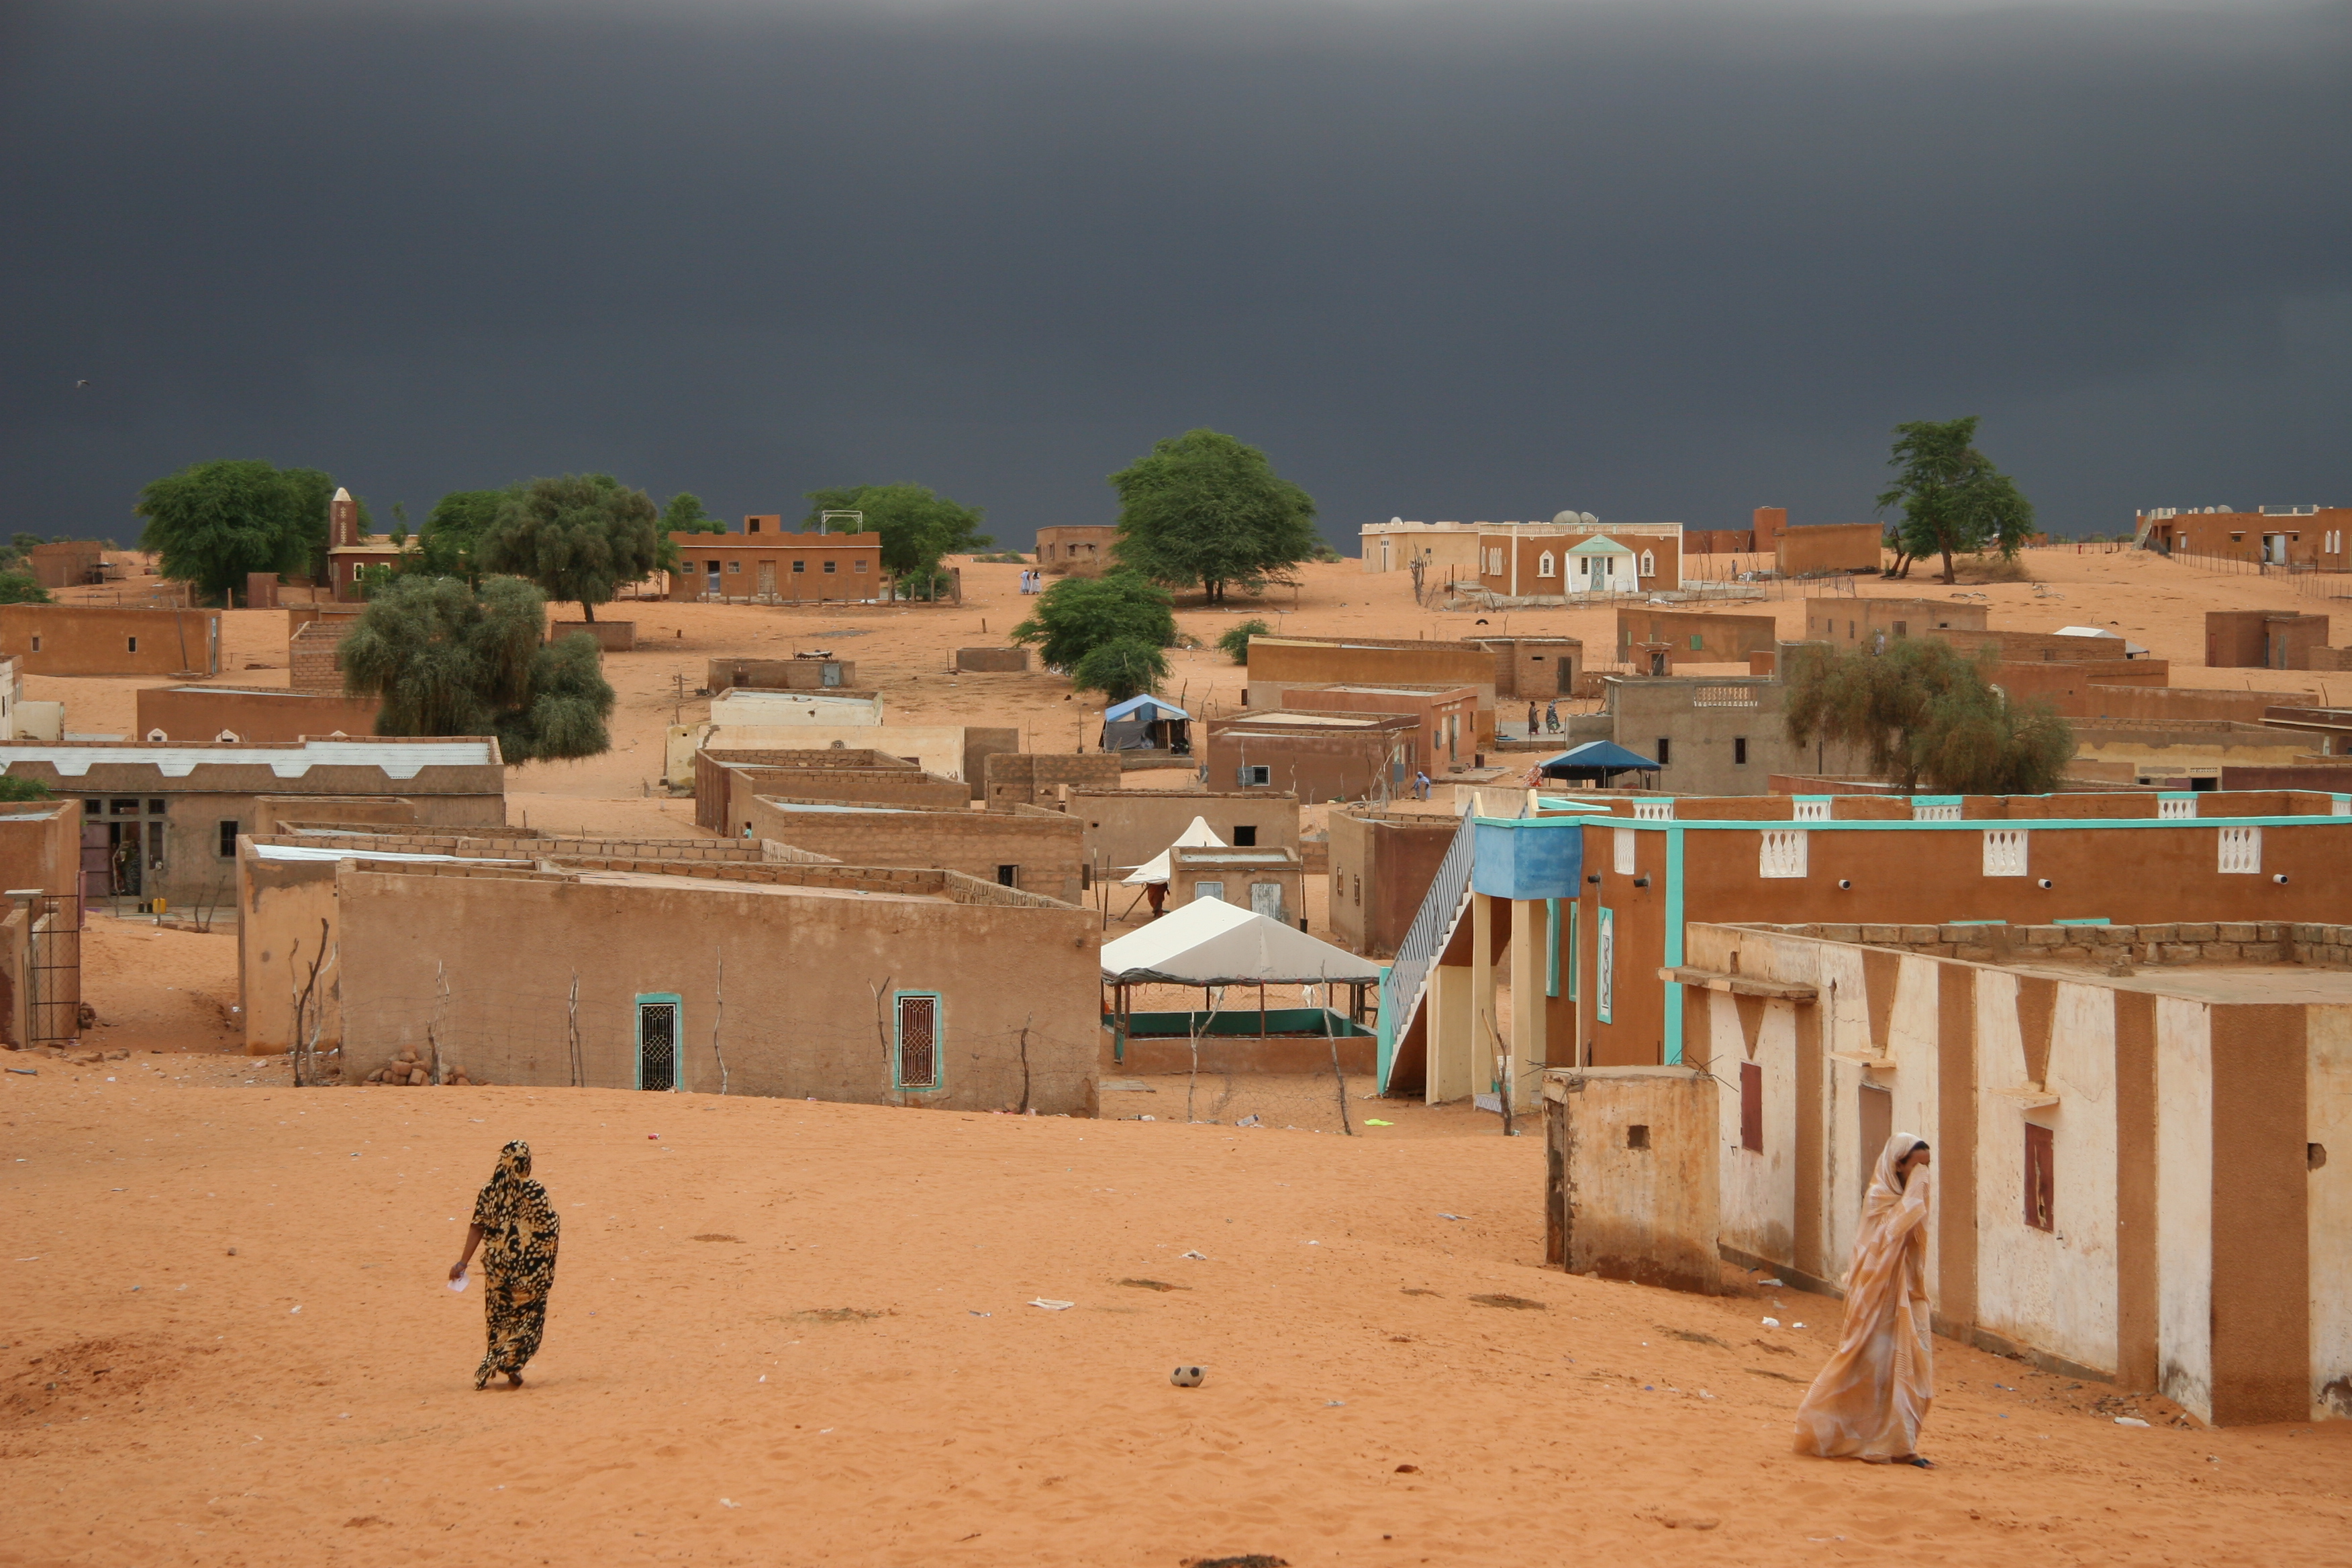 http://upload.wikimedia.org/wikipedia/commons/3/37/Bareina,_Mauritania.jpg